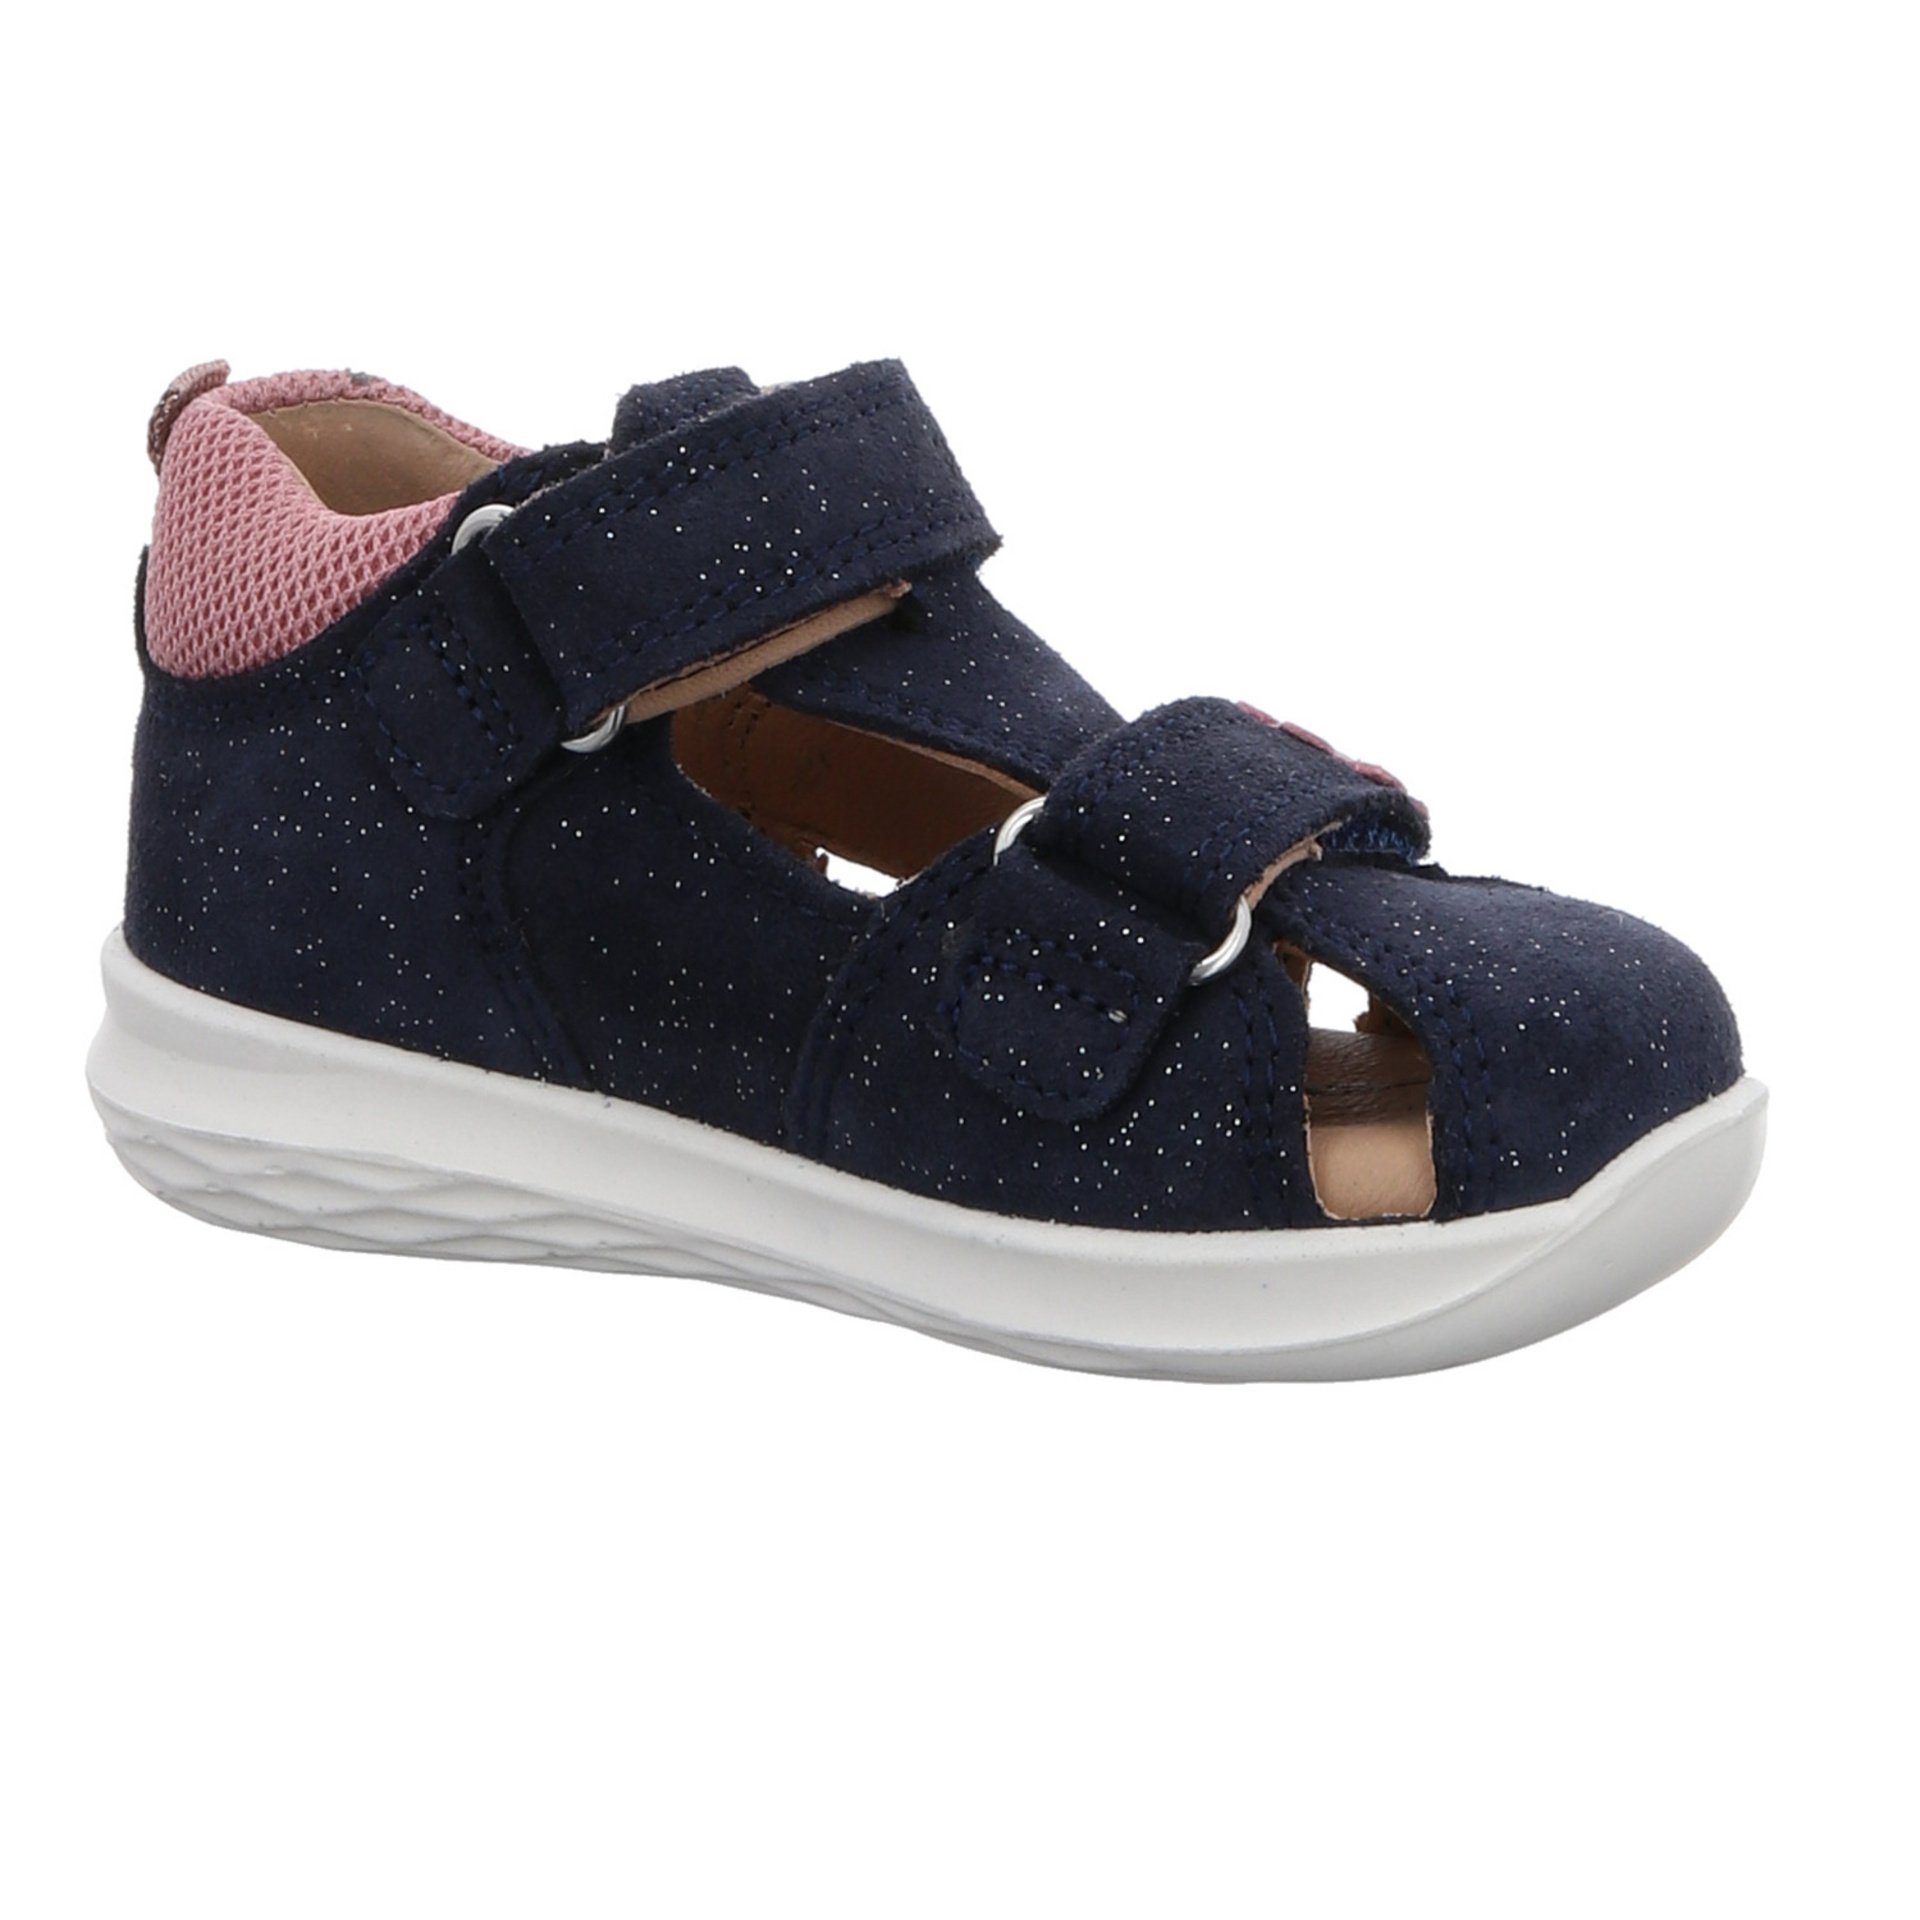 Schuhe Leder-/Textilkombination Sandale sonst Kombi blau Mädchen Bumblebee Superfit Sandalen Minilette